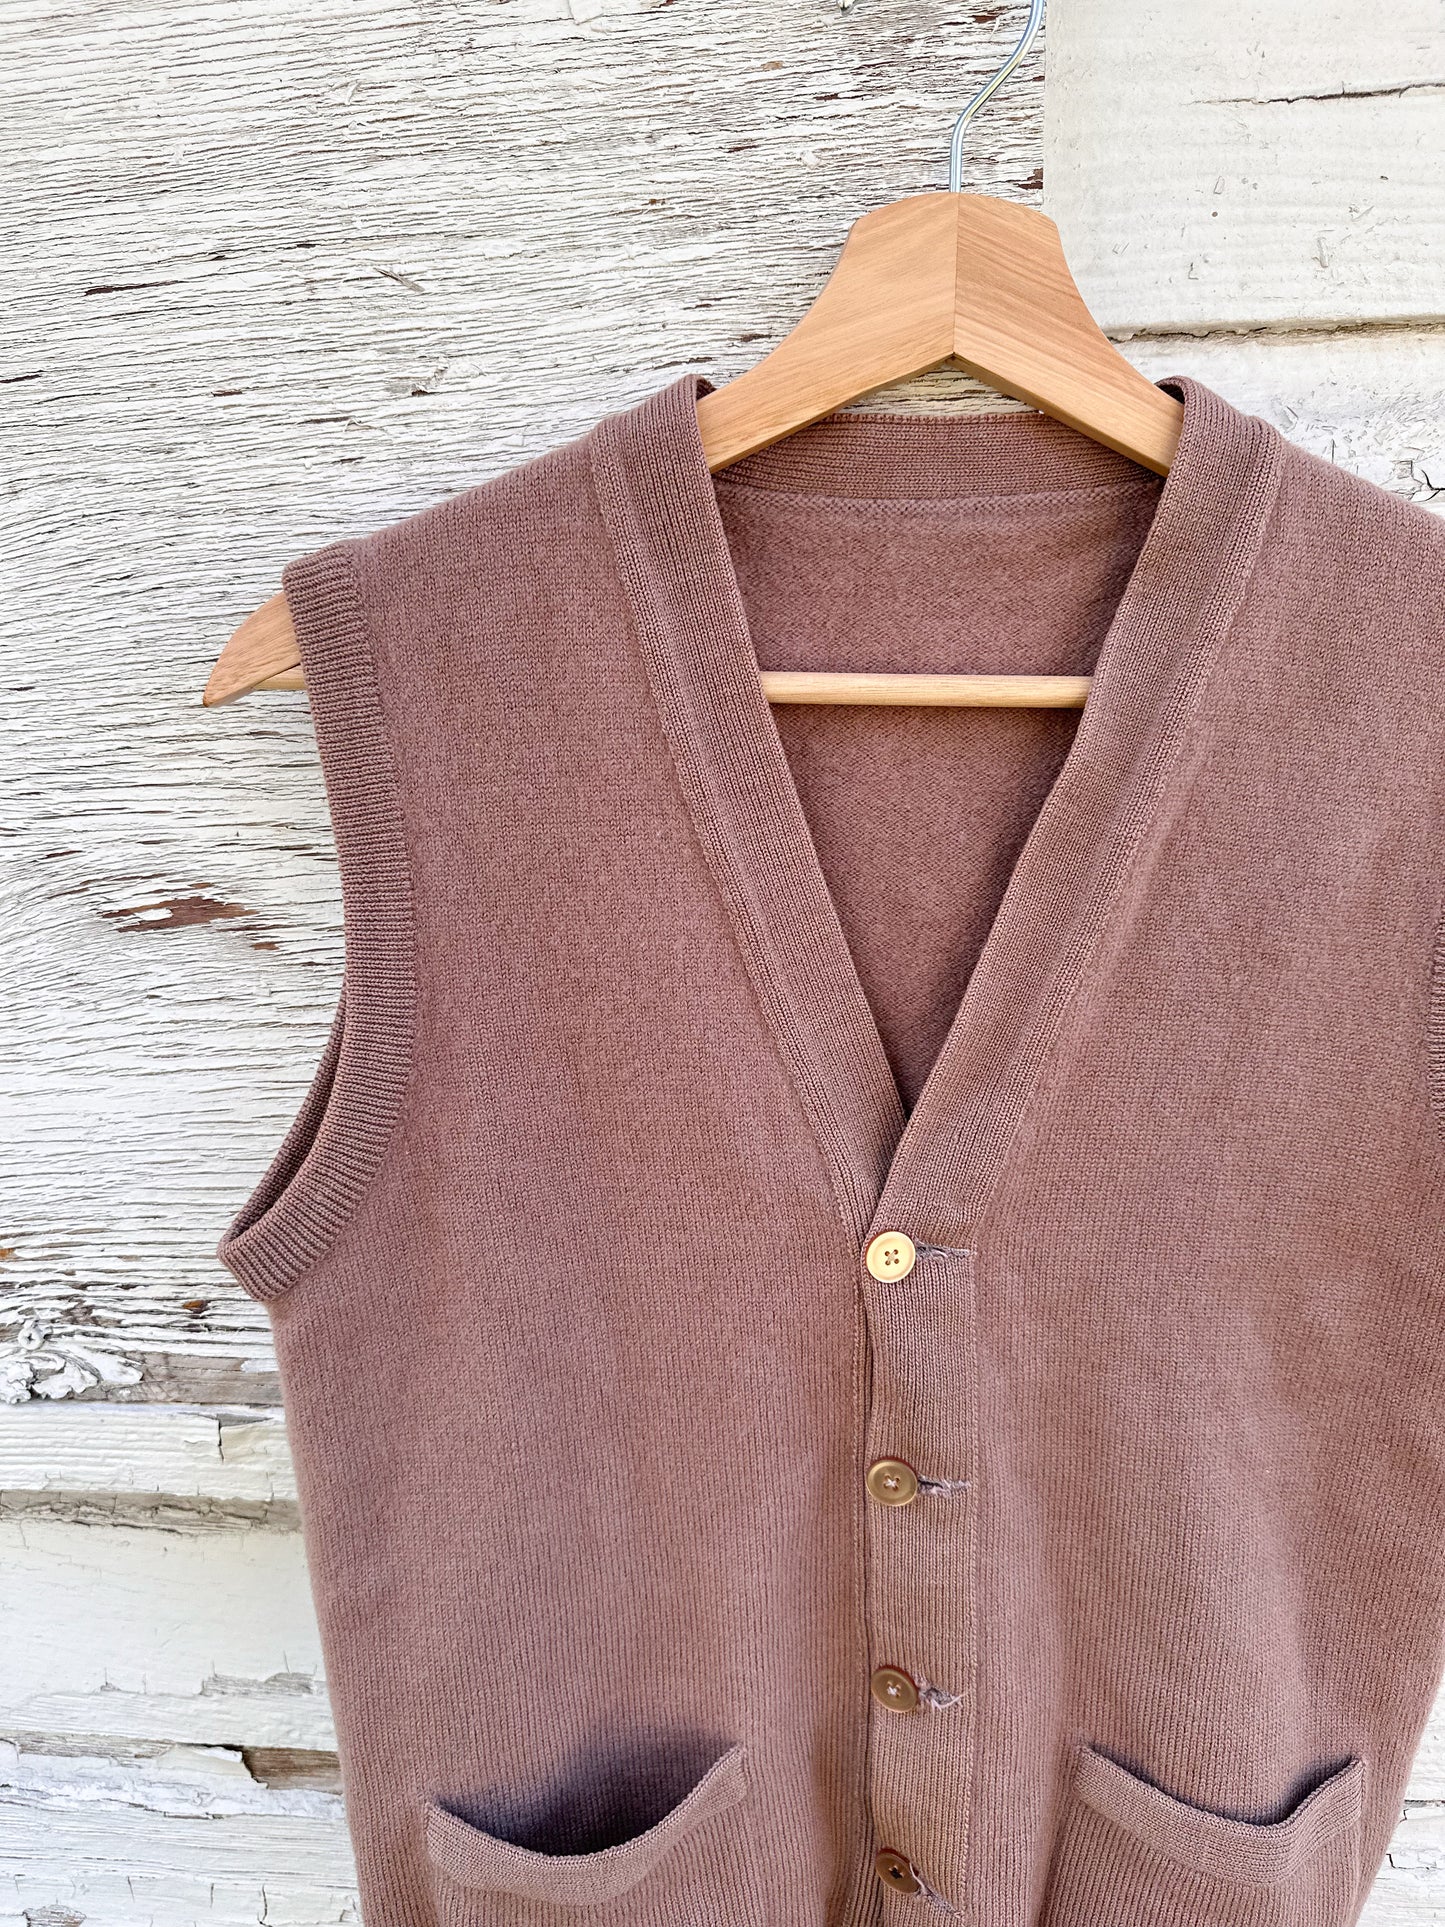 vintage brown sweater vest